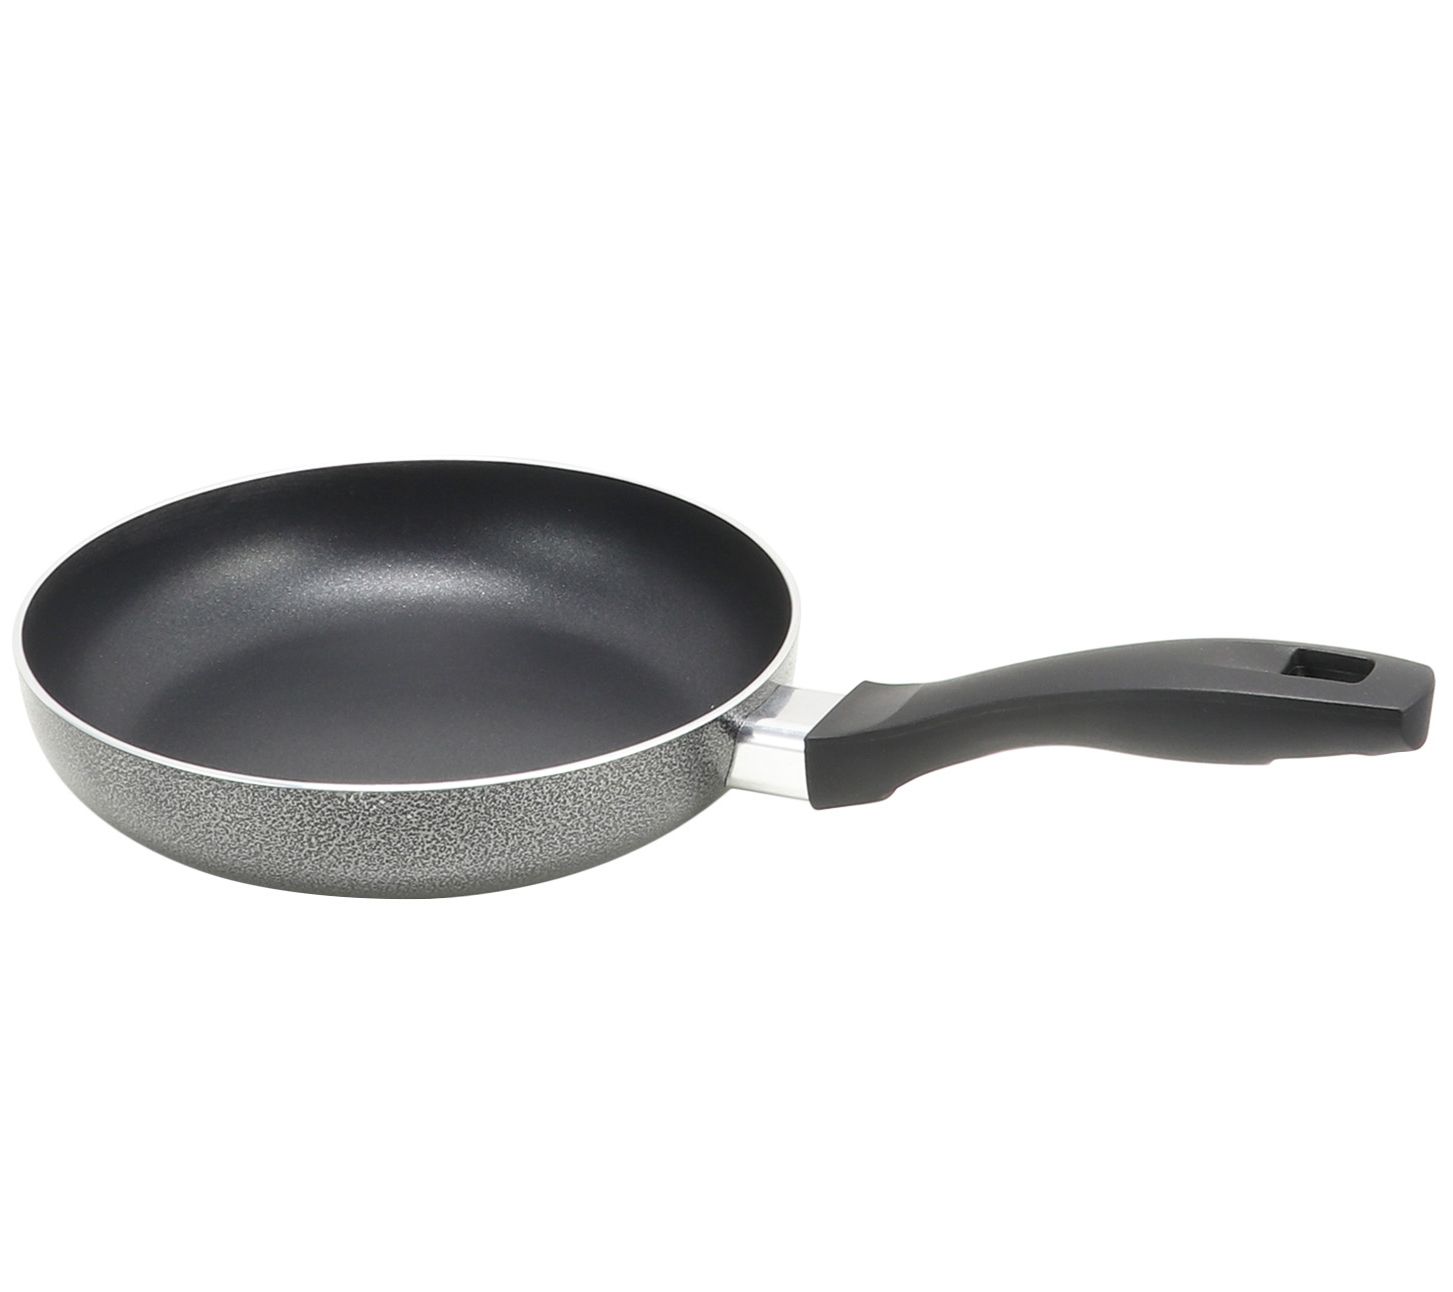 Oster Ashford 8 Inch Non Stick Aluminum Frying Pan in Black